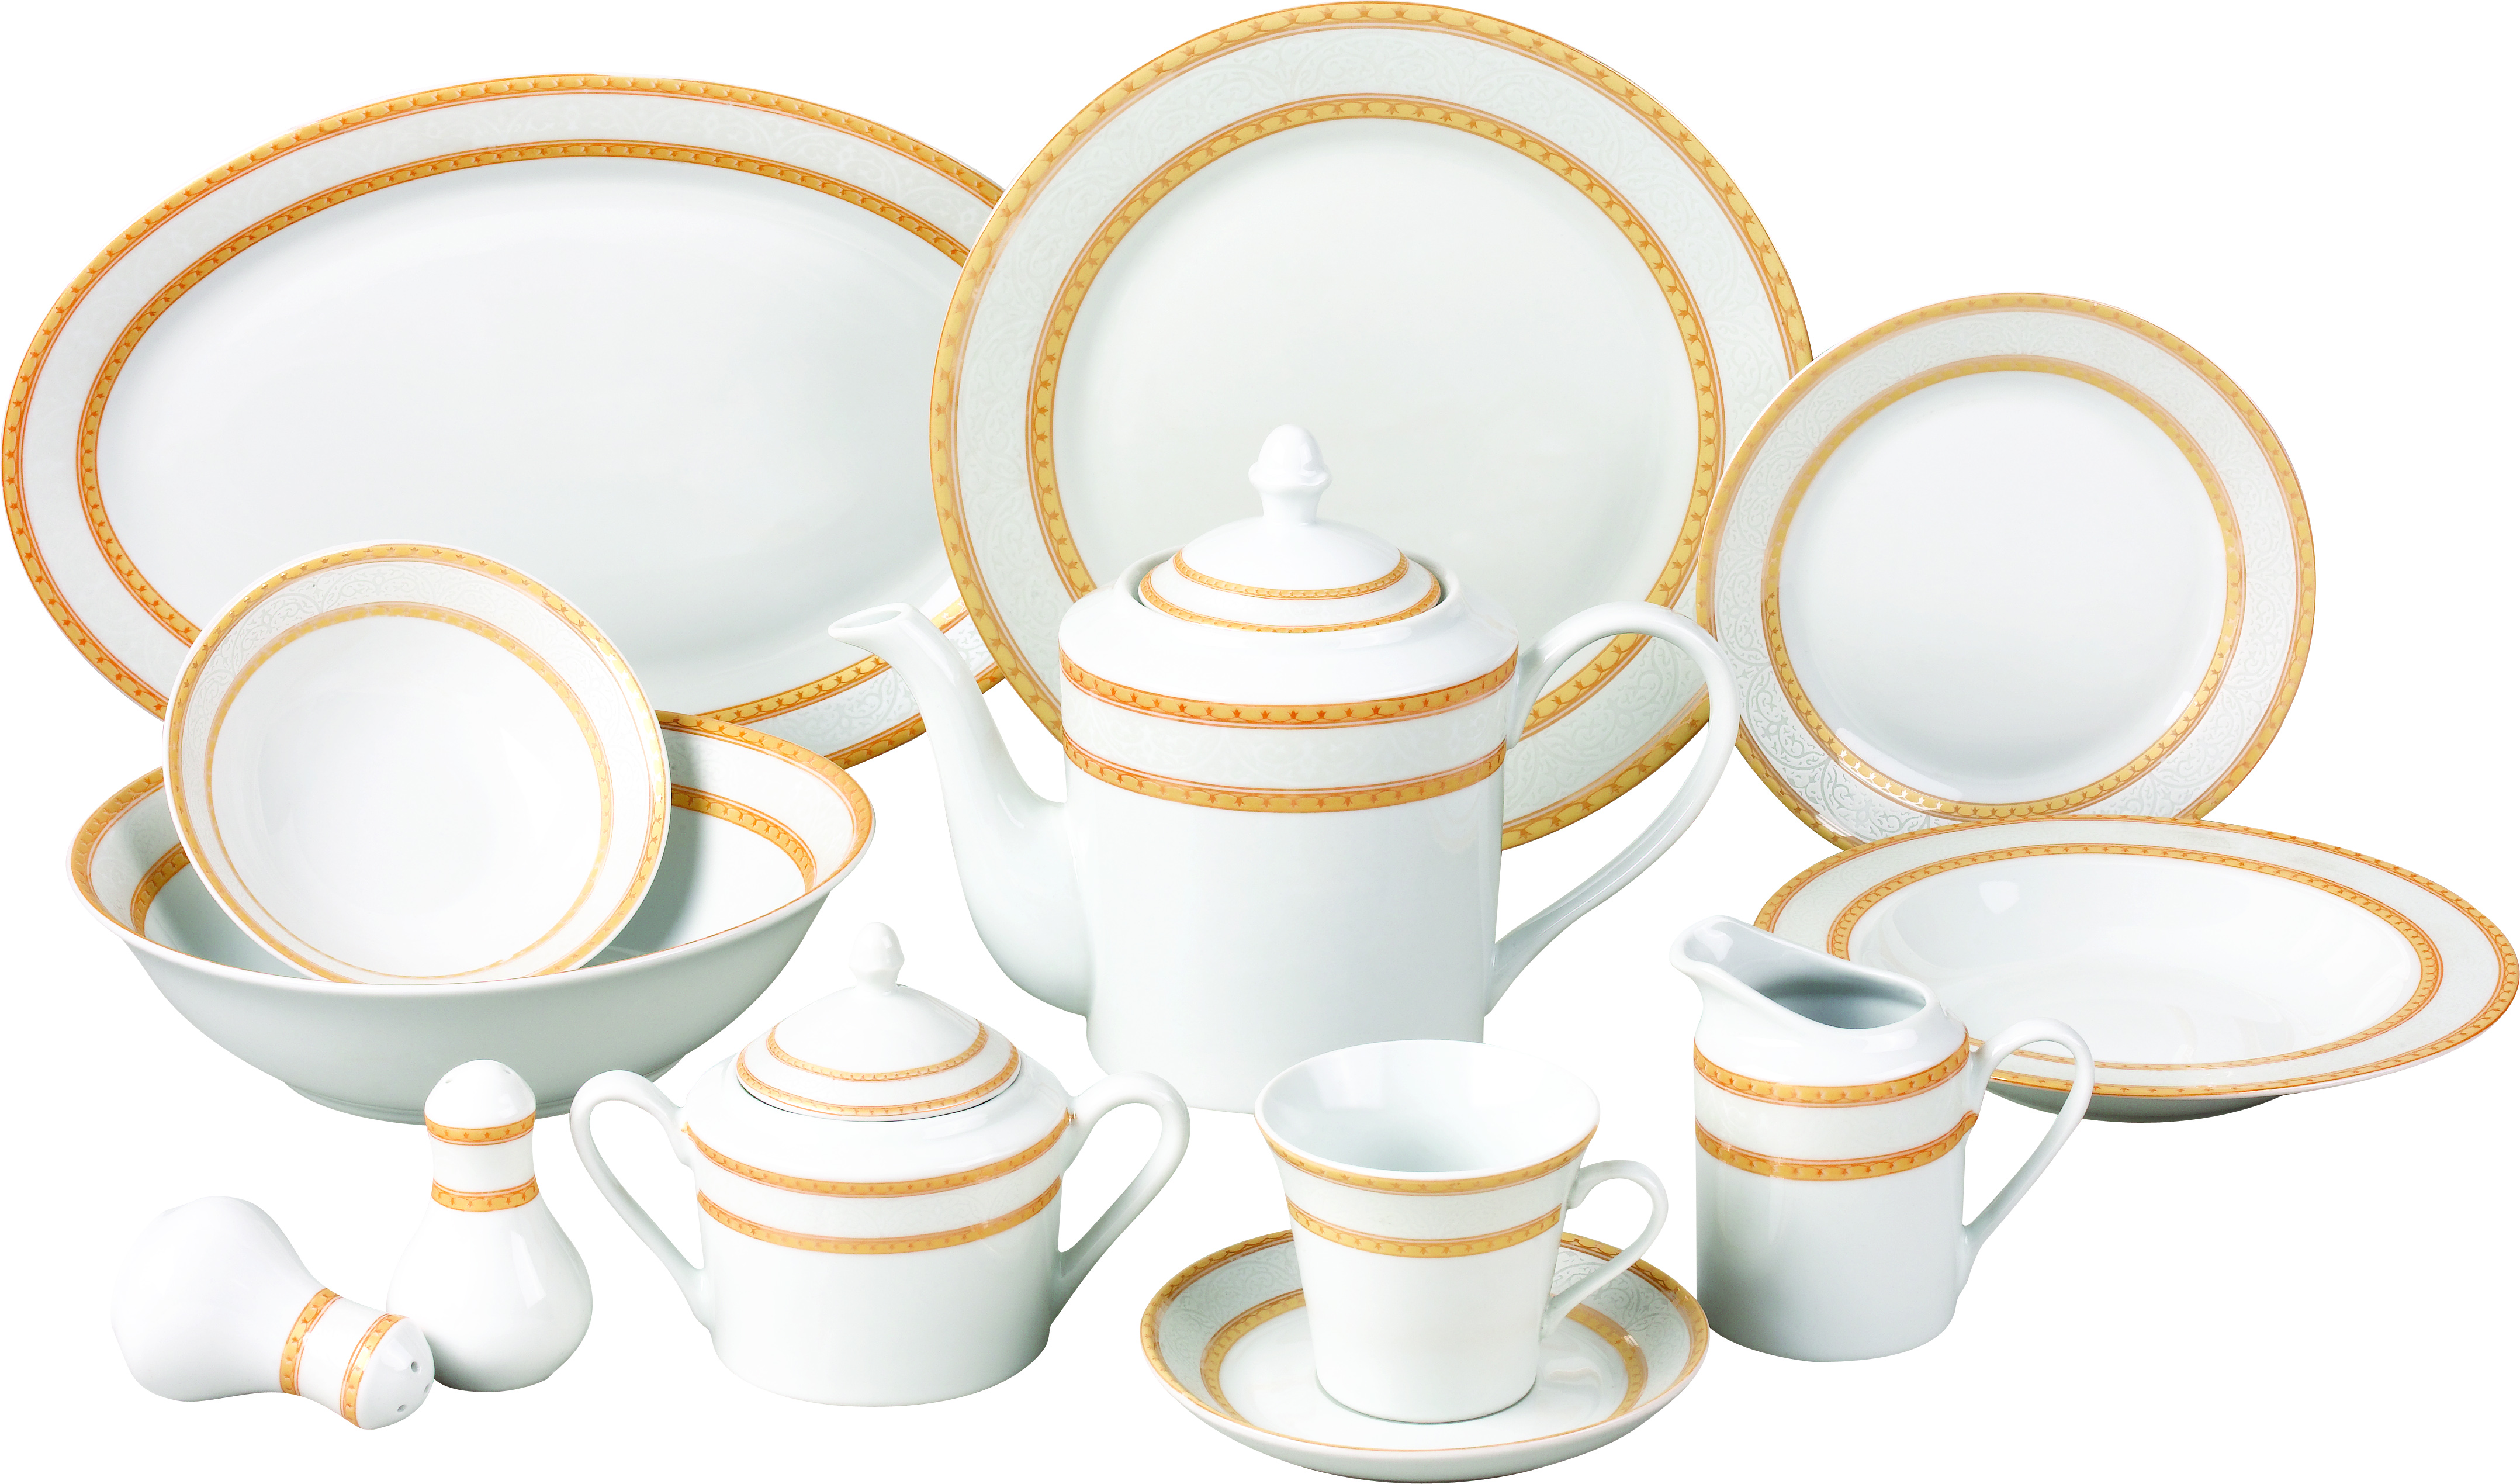 57 Piece Gold Matte Floral Border Porcelain Dinnerware set.